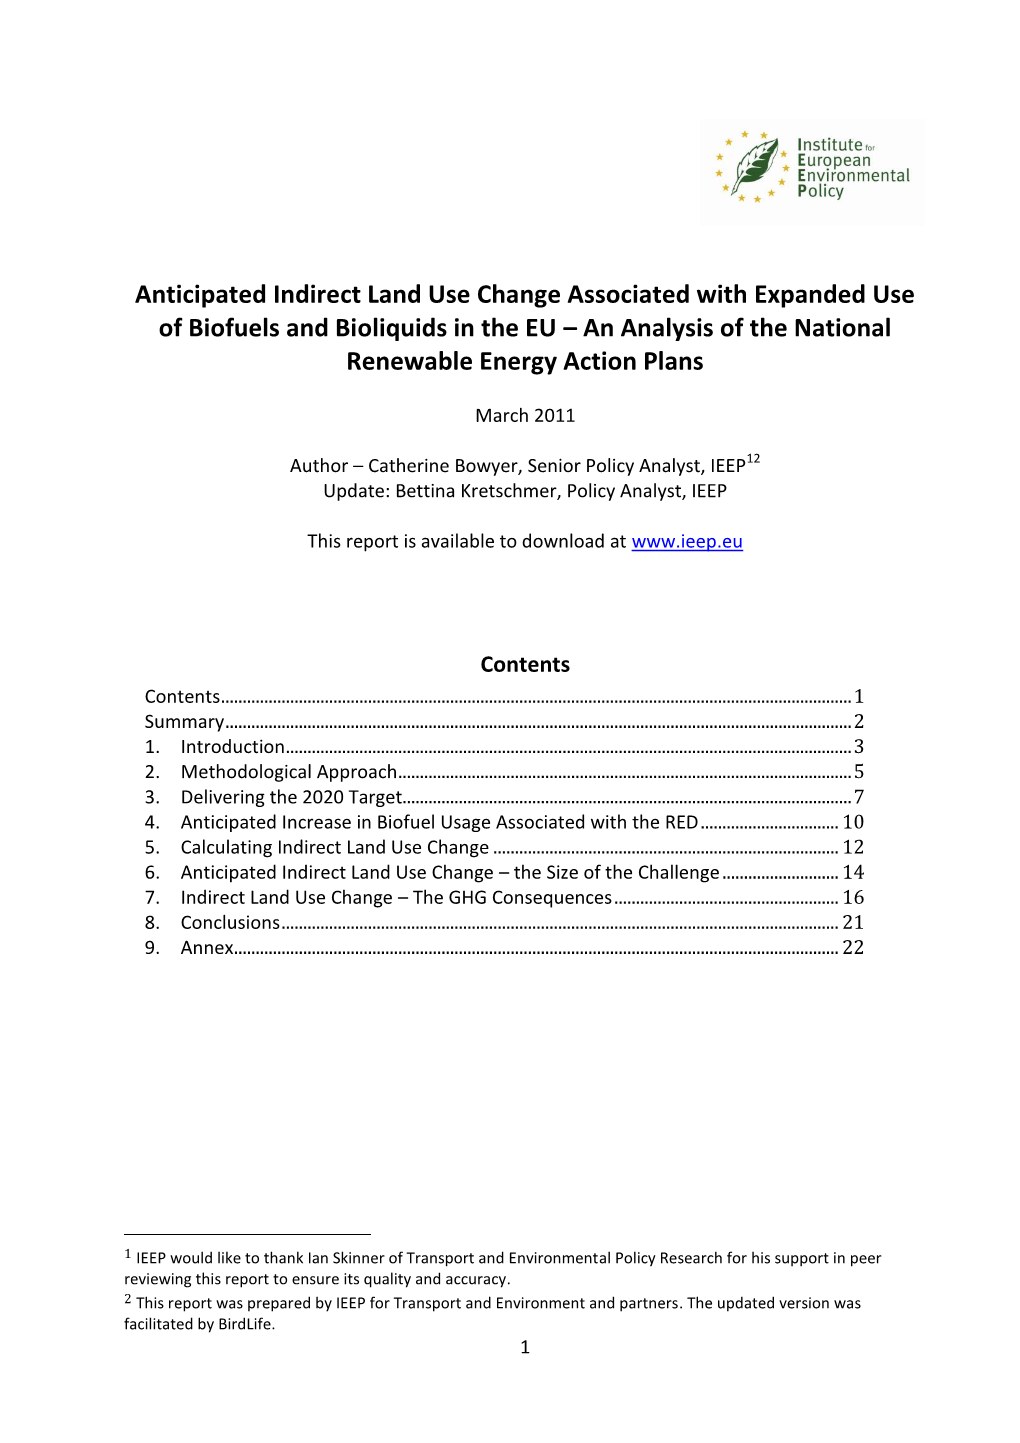 Analysis of ILUC Based on the National Renewable Energy Action